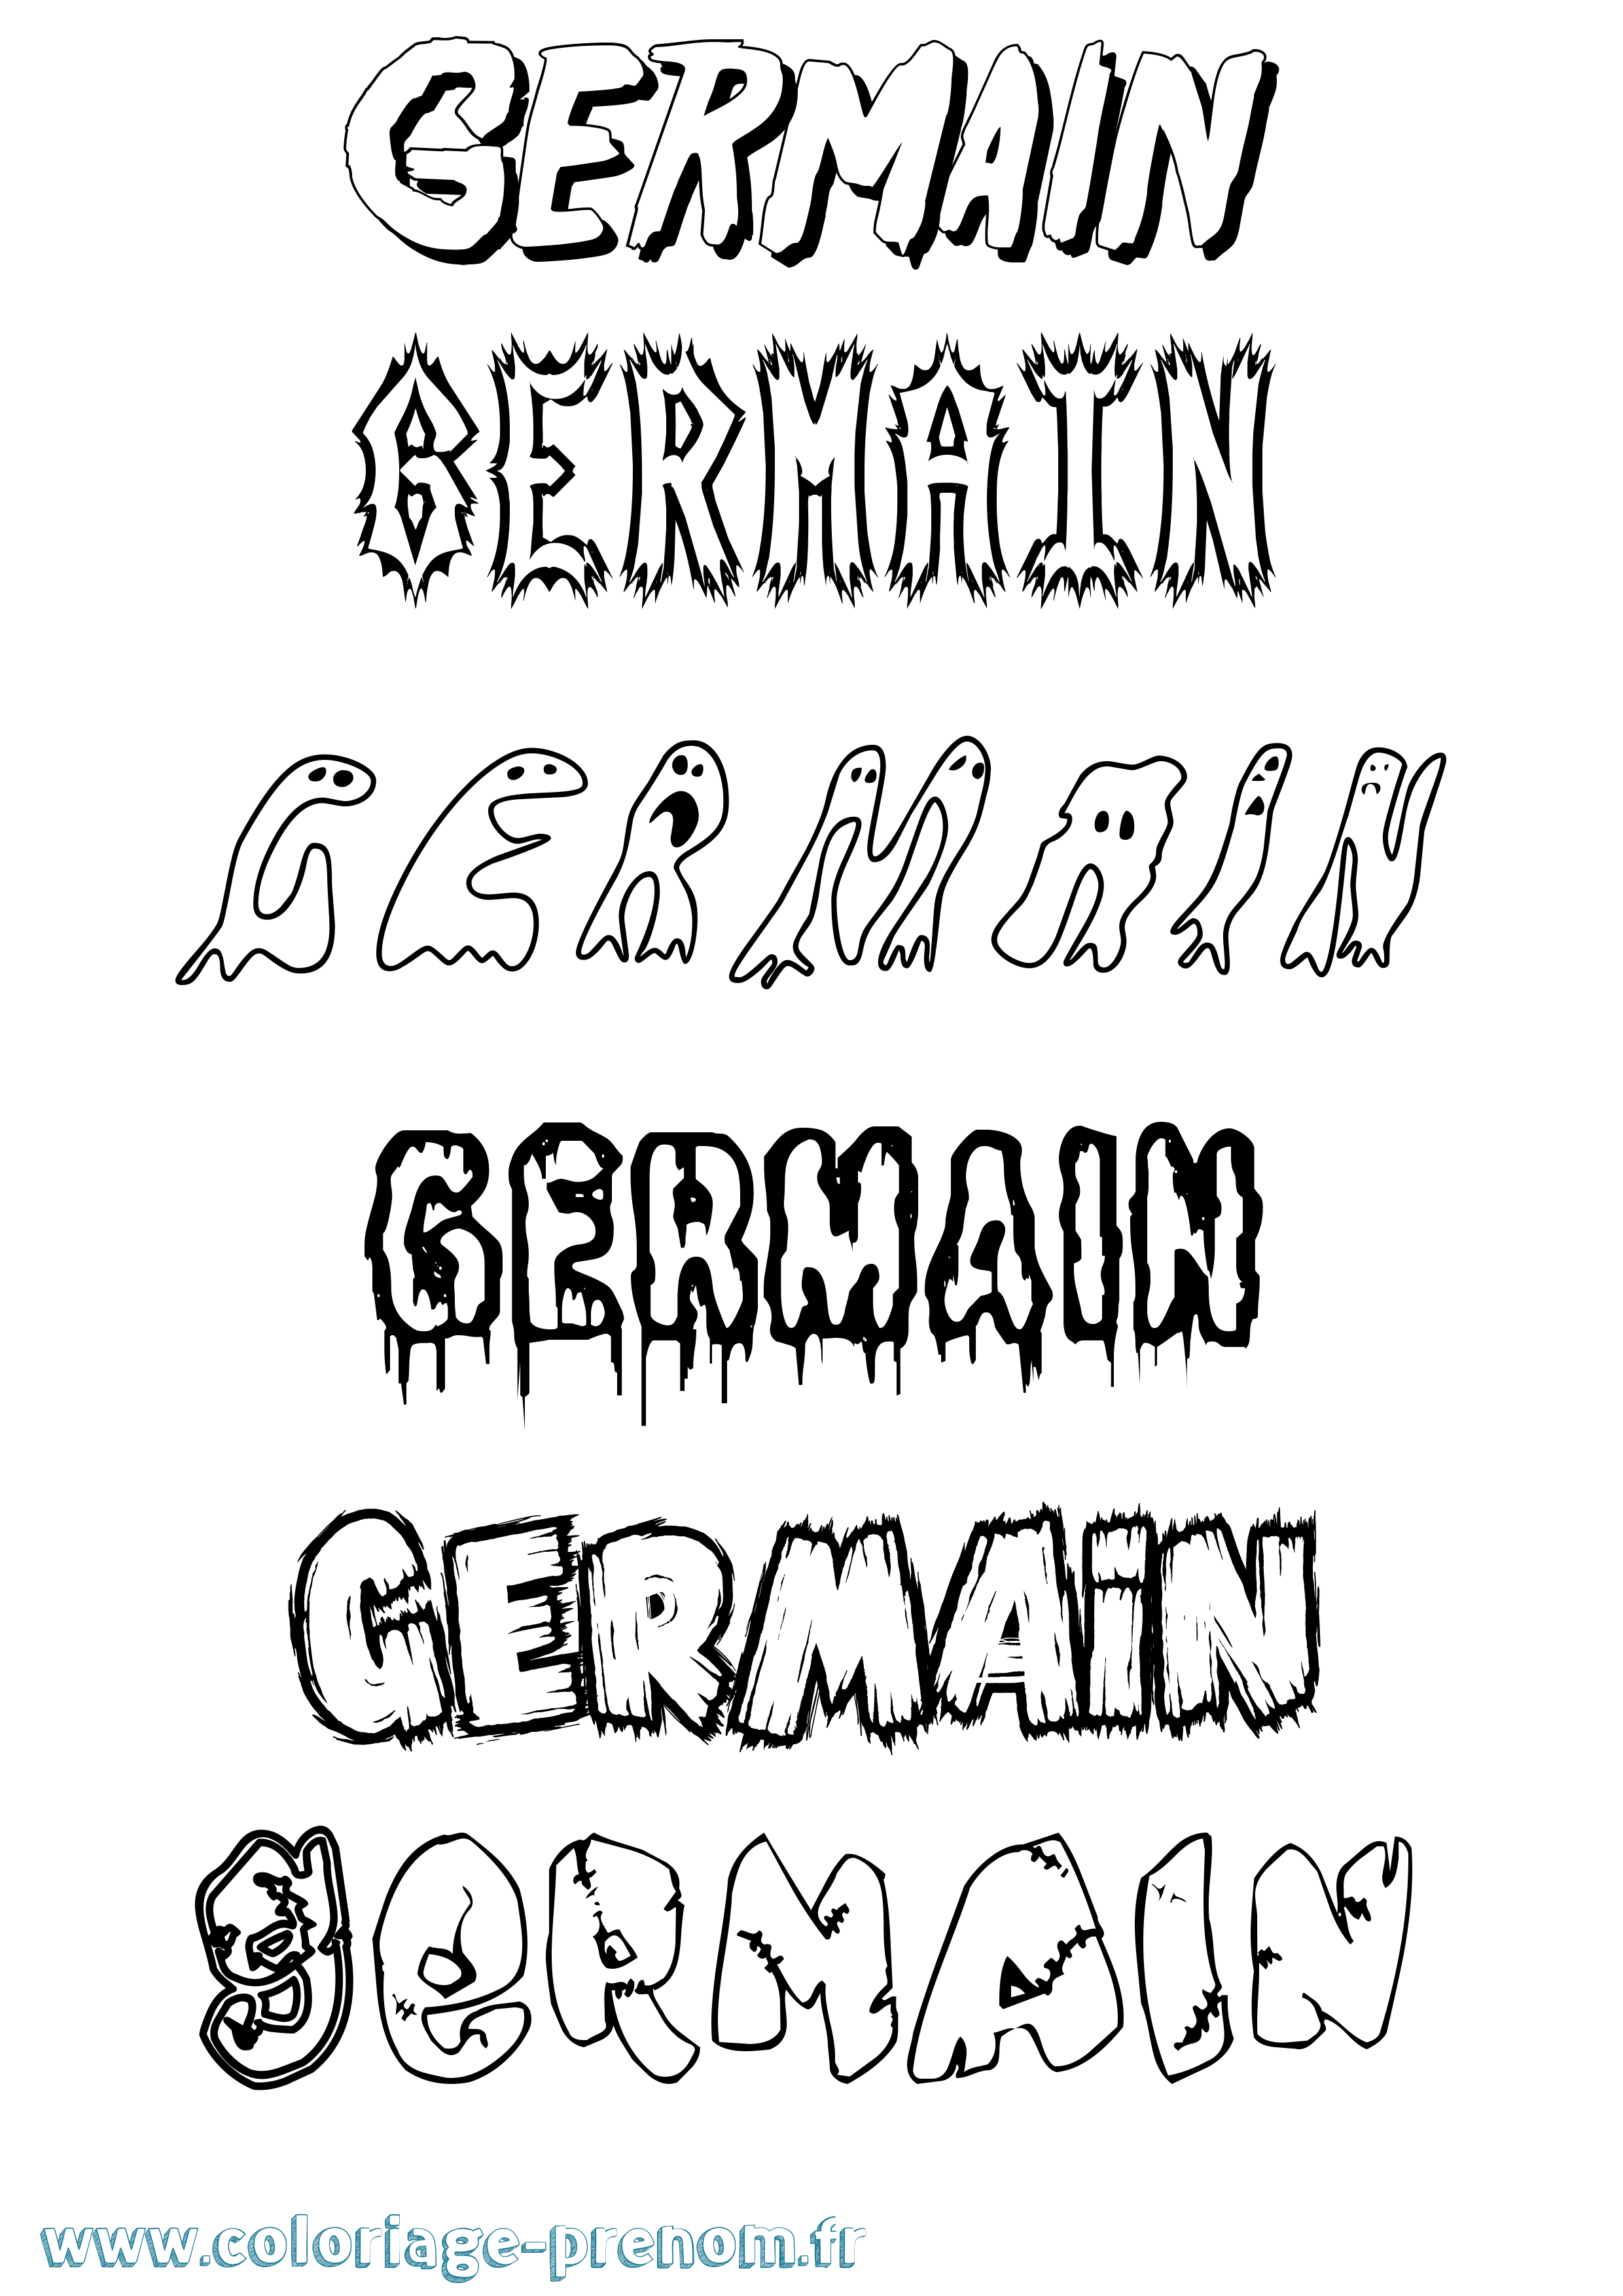 Coloriage prénom Germain Frisson